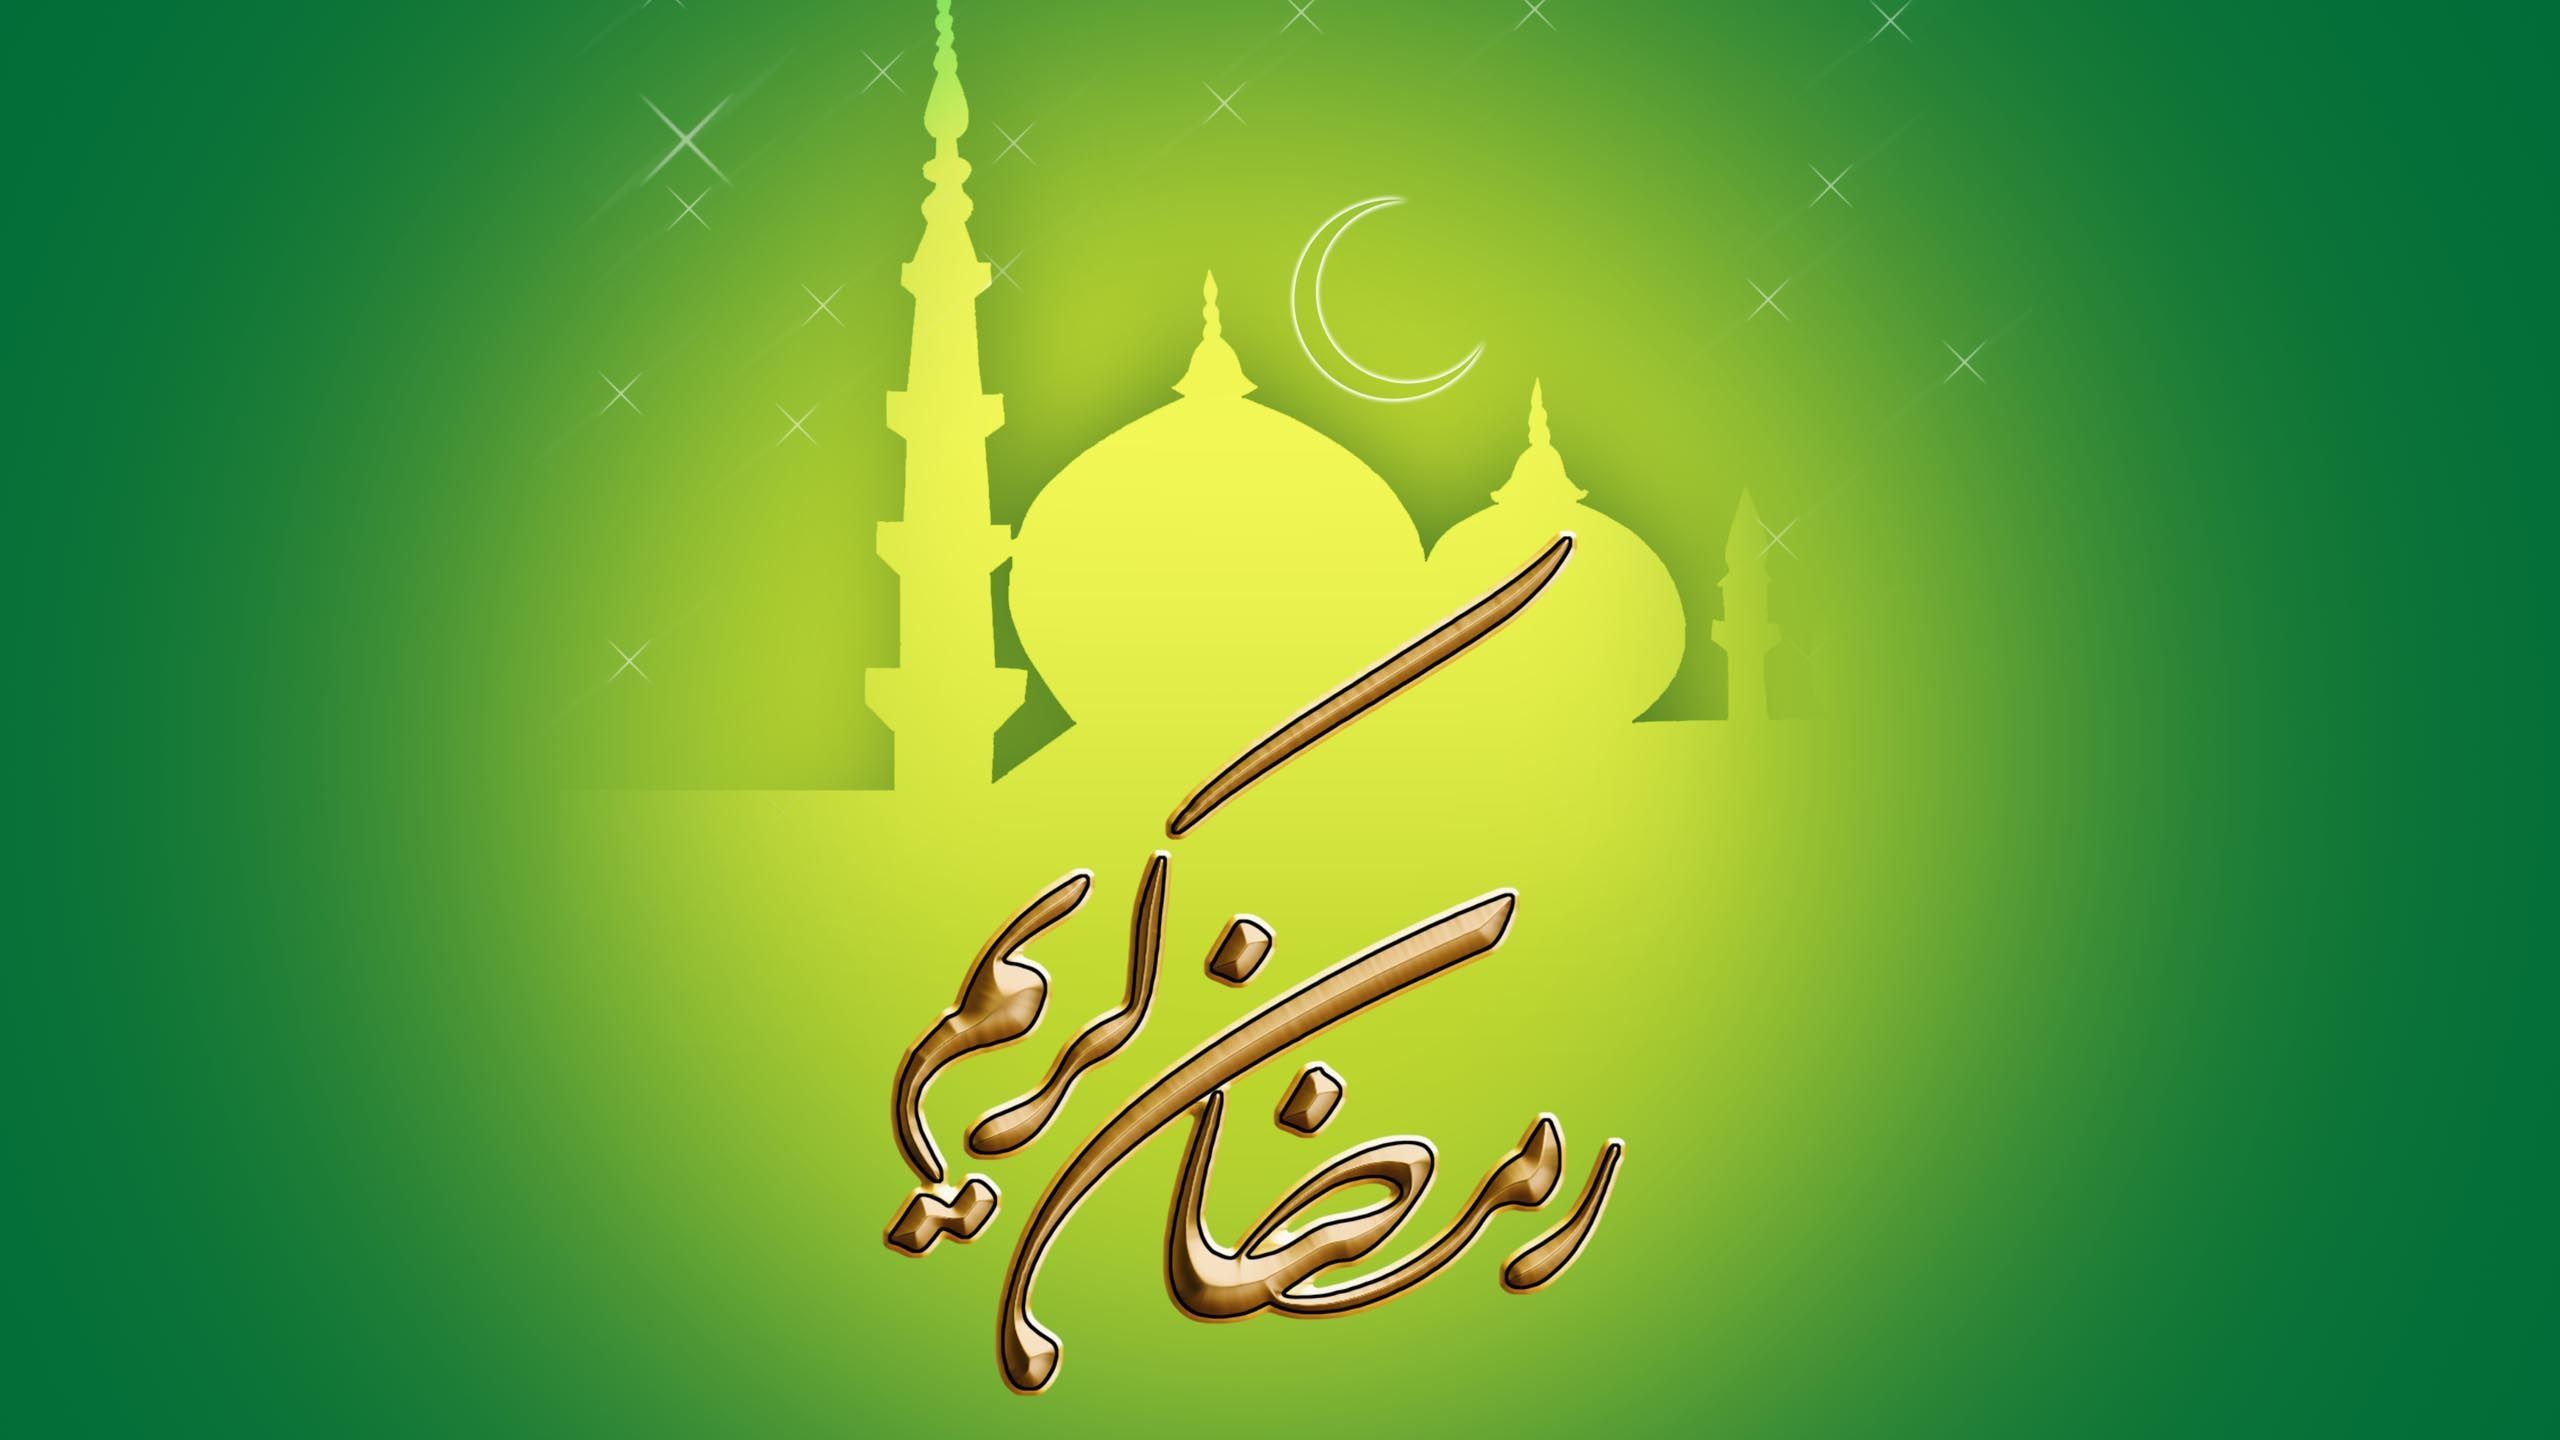 Ramadan Mubarak wallpaper in 2560x1440 resolution